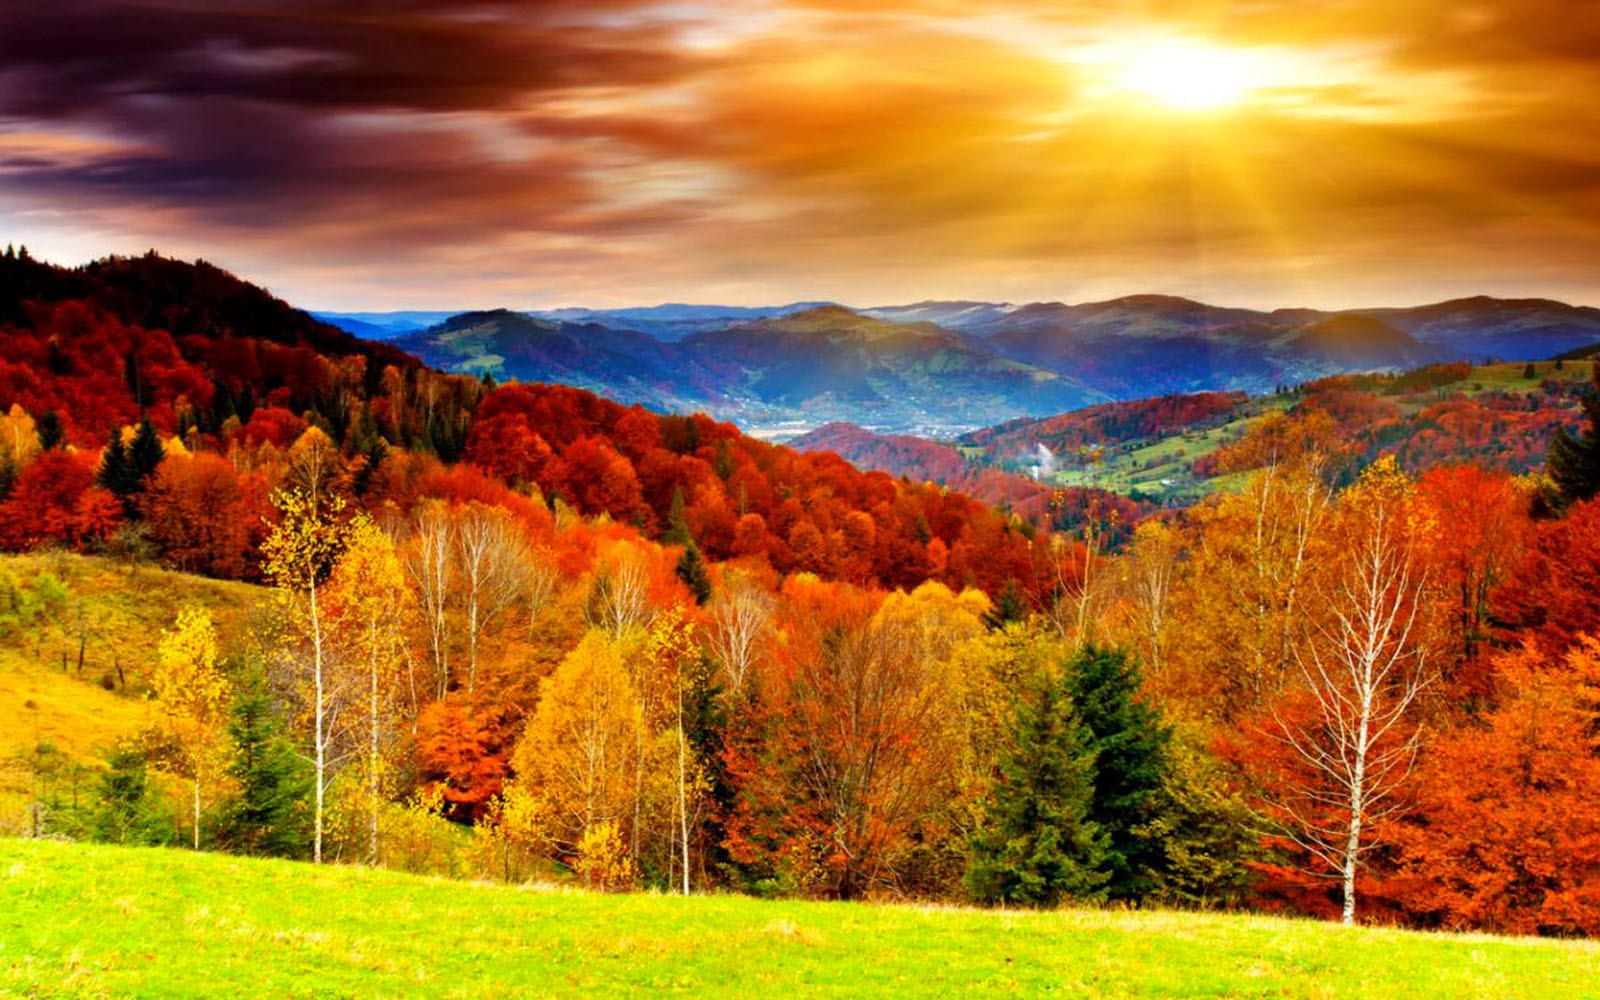 Autumn Pictures For Desktop Backgrounds WallpaperSafari